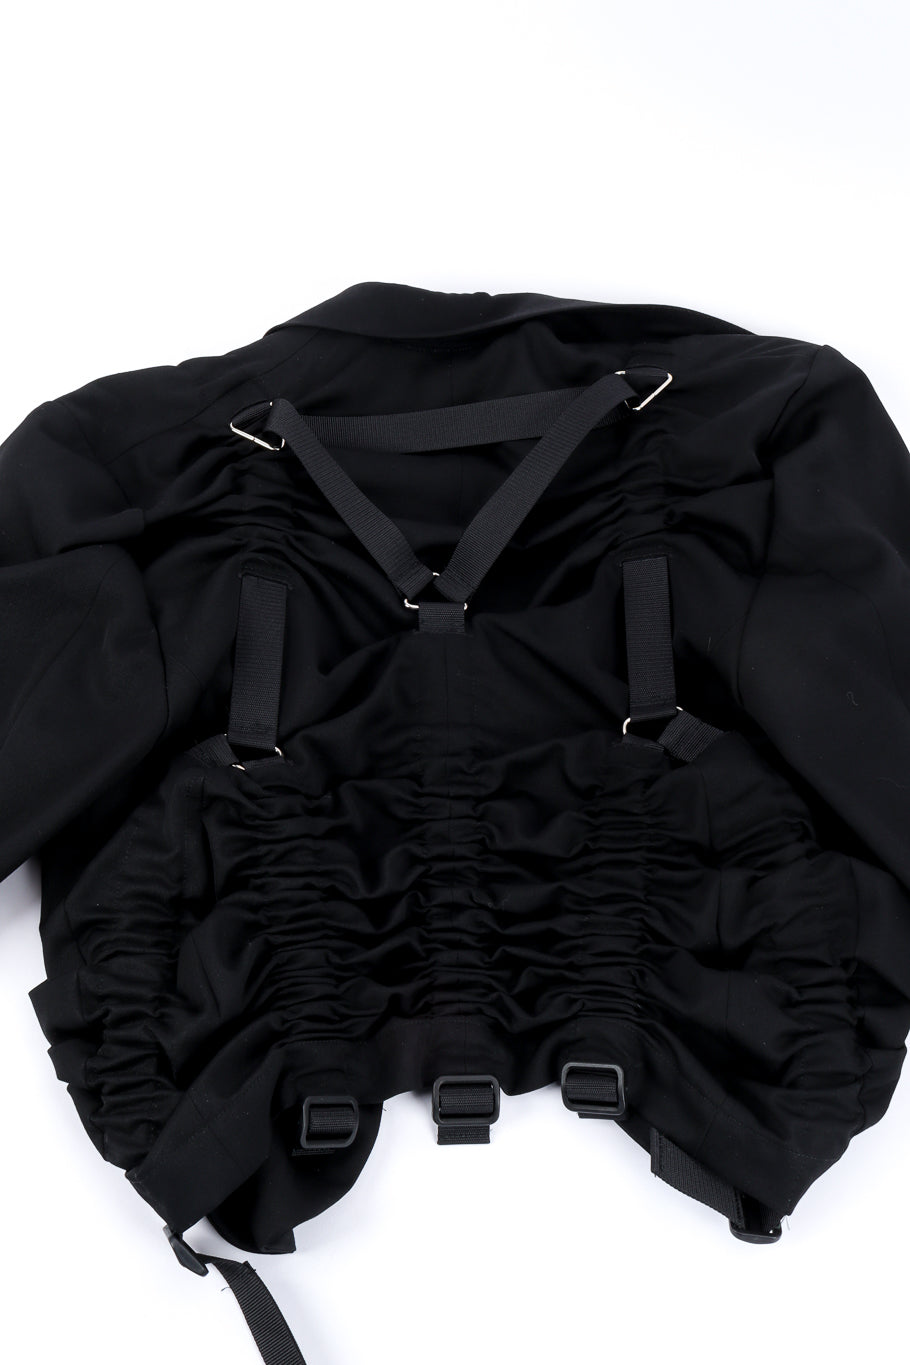 Junya Watanabe 2003 S/S Parachute Harness Jacket back straps @recessla